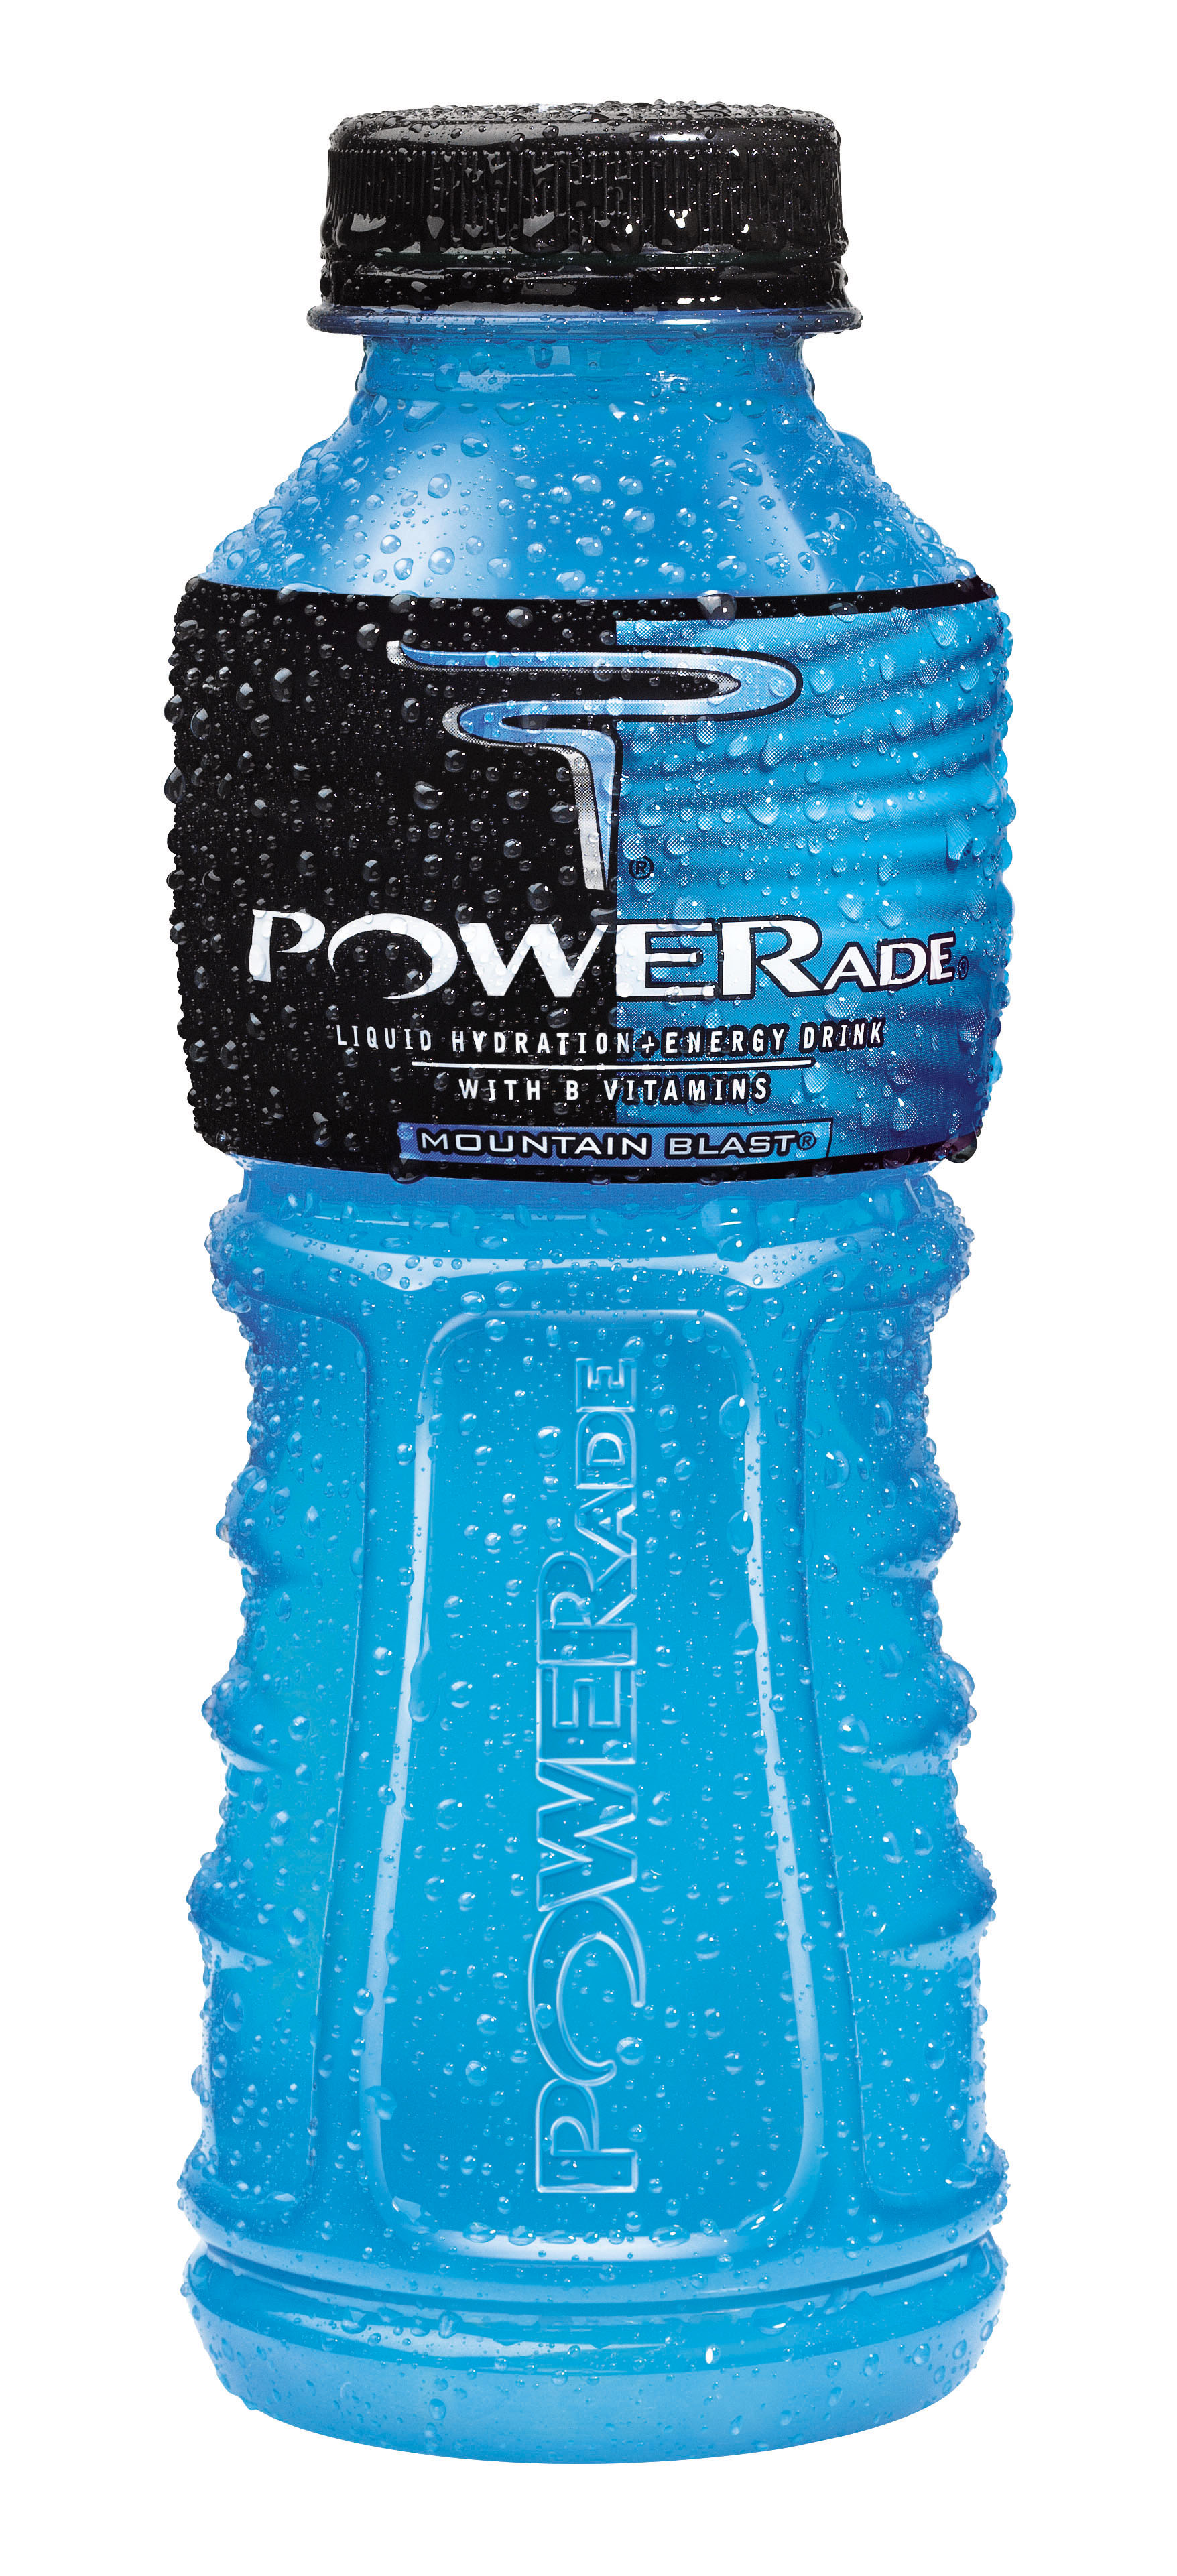 Power raid. Напиток Powerade это Энергетик. Напиток для спортсменов Powerade. Энергетик голубой Powerade. Напиток повер рейд.